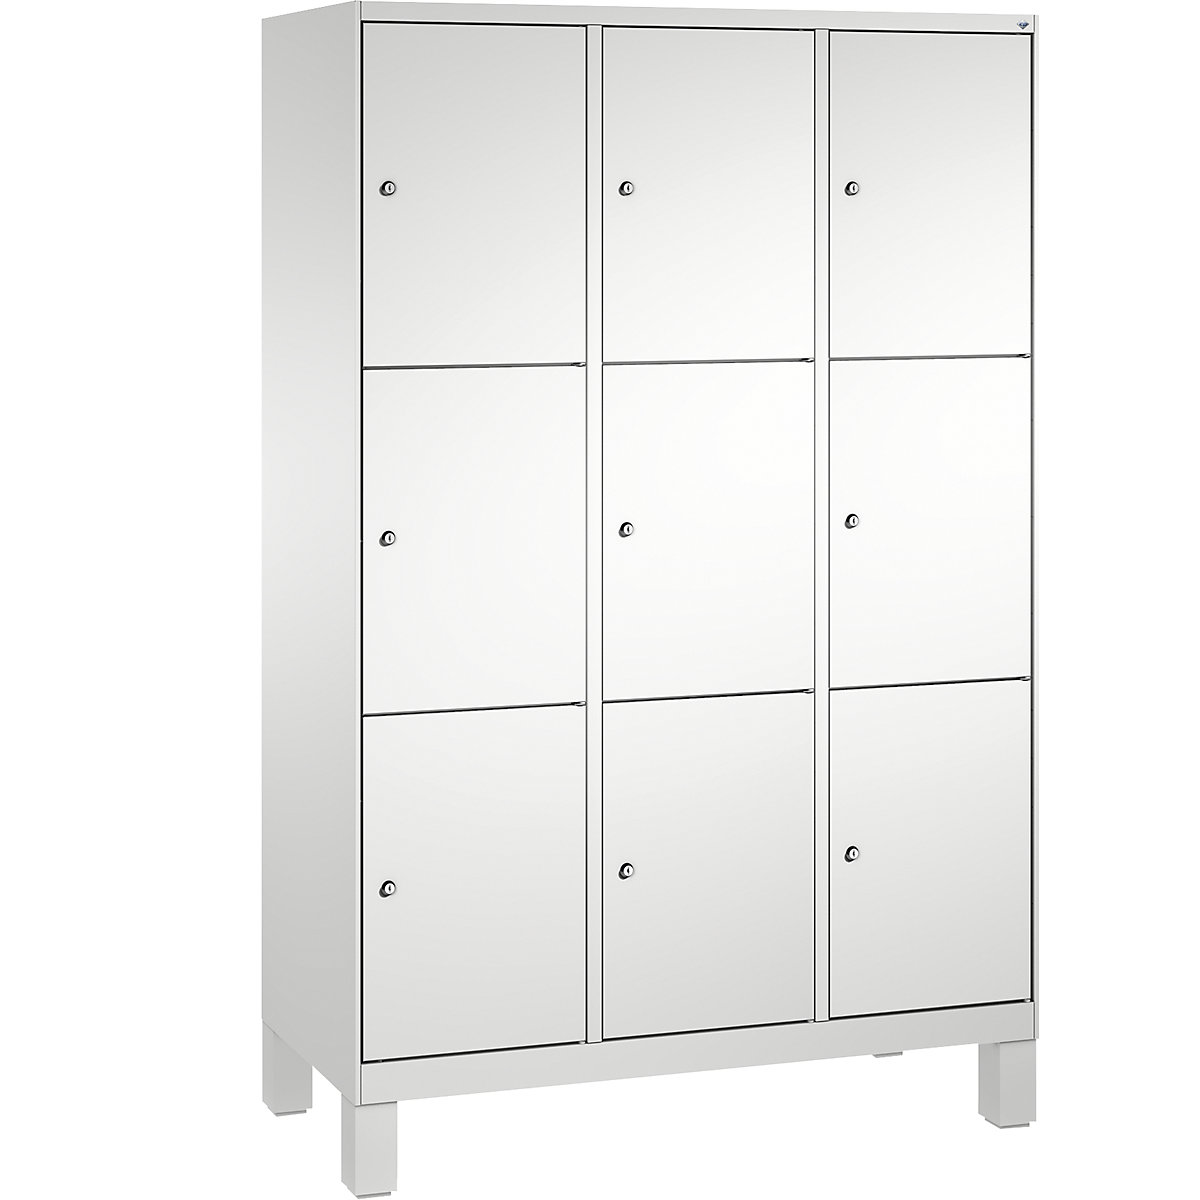 EVOLO locker unit, with feet – C+P, 3 compartments, 3 shelf compartments each, compartment width 400 mm, light grey-4